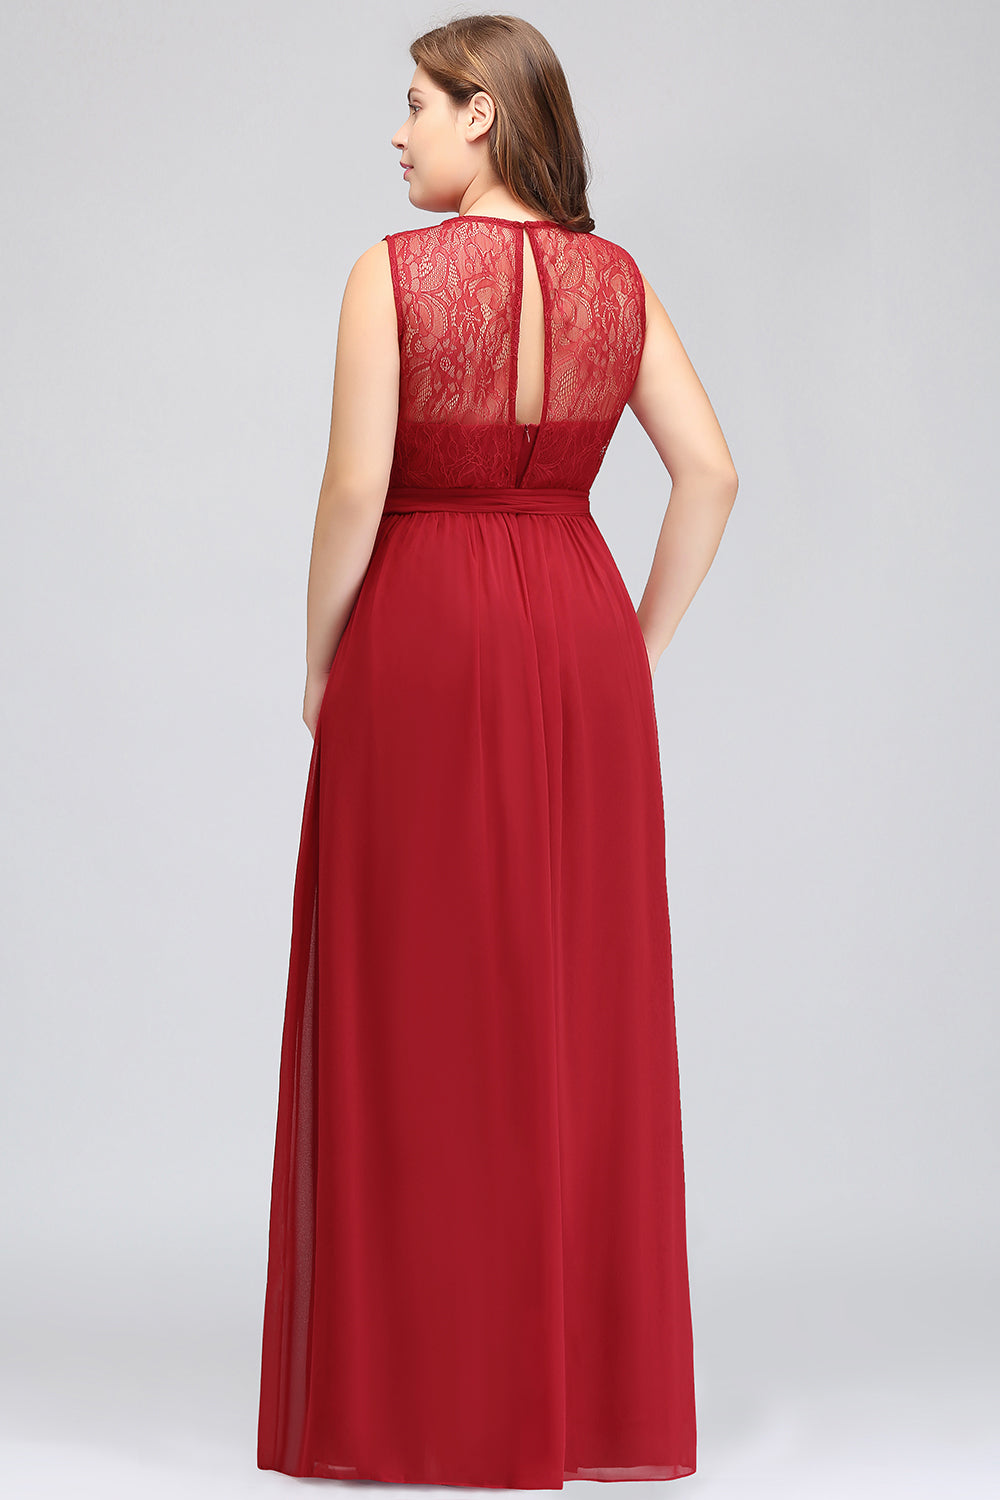 Plus Size Jewel Sleeveless Red Lace Long Bridesmaid Dress with Ruffle